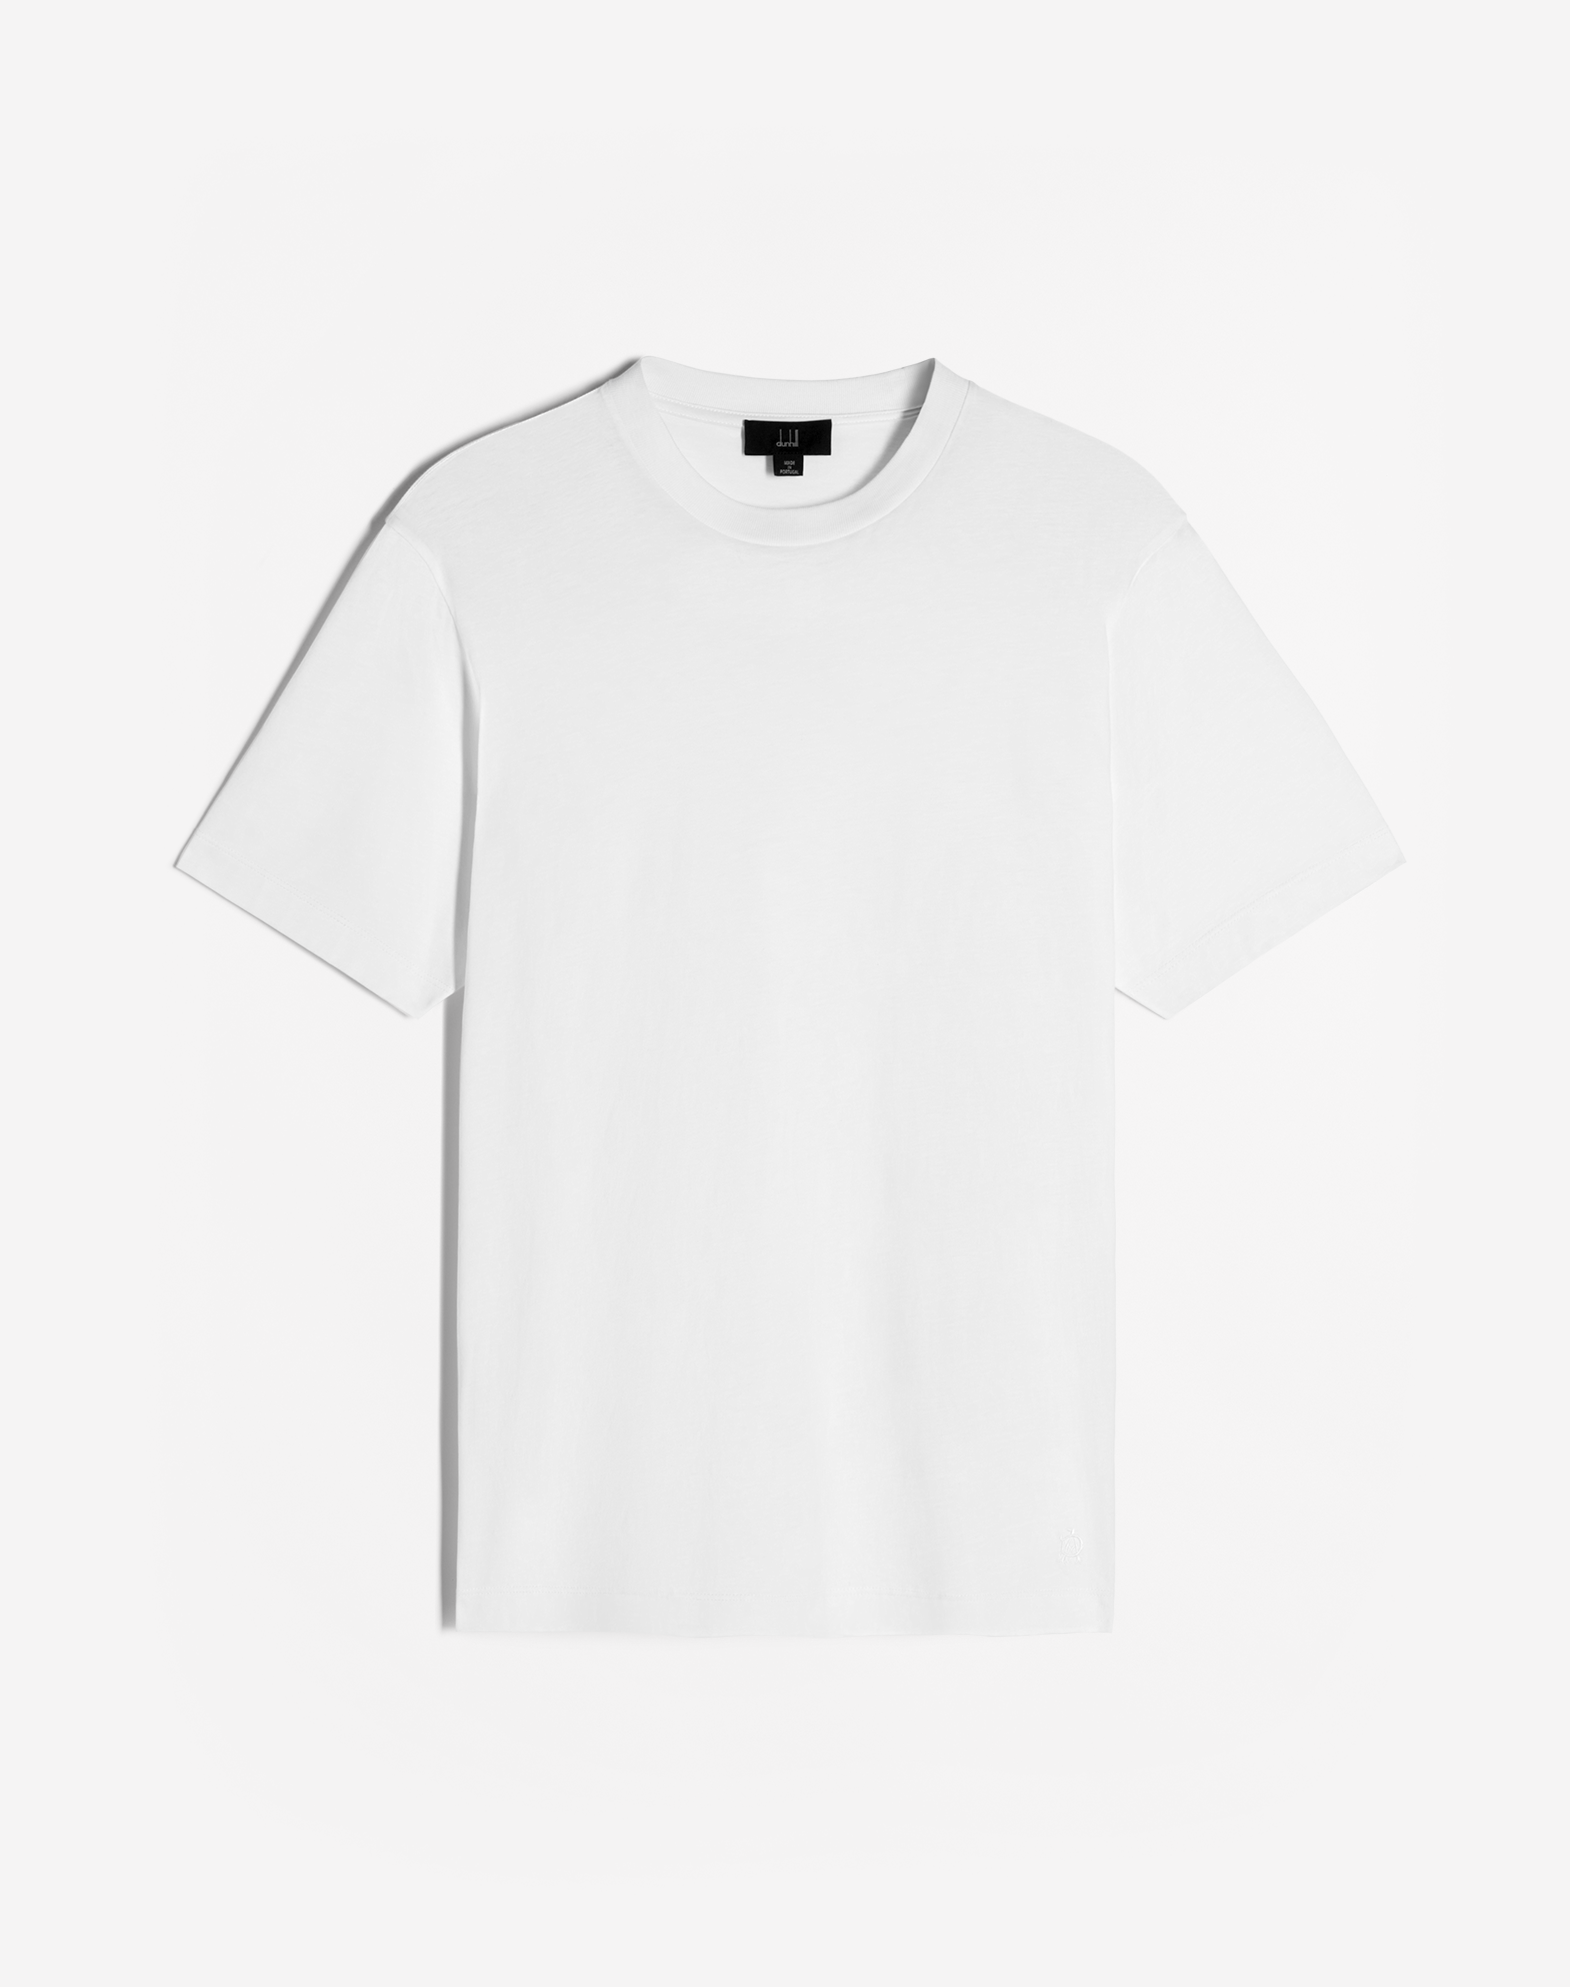 Dunhill Luxury Men's T-shirt